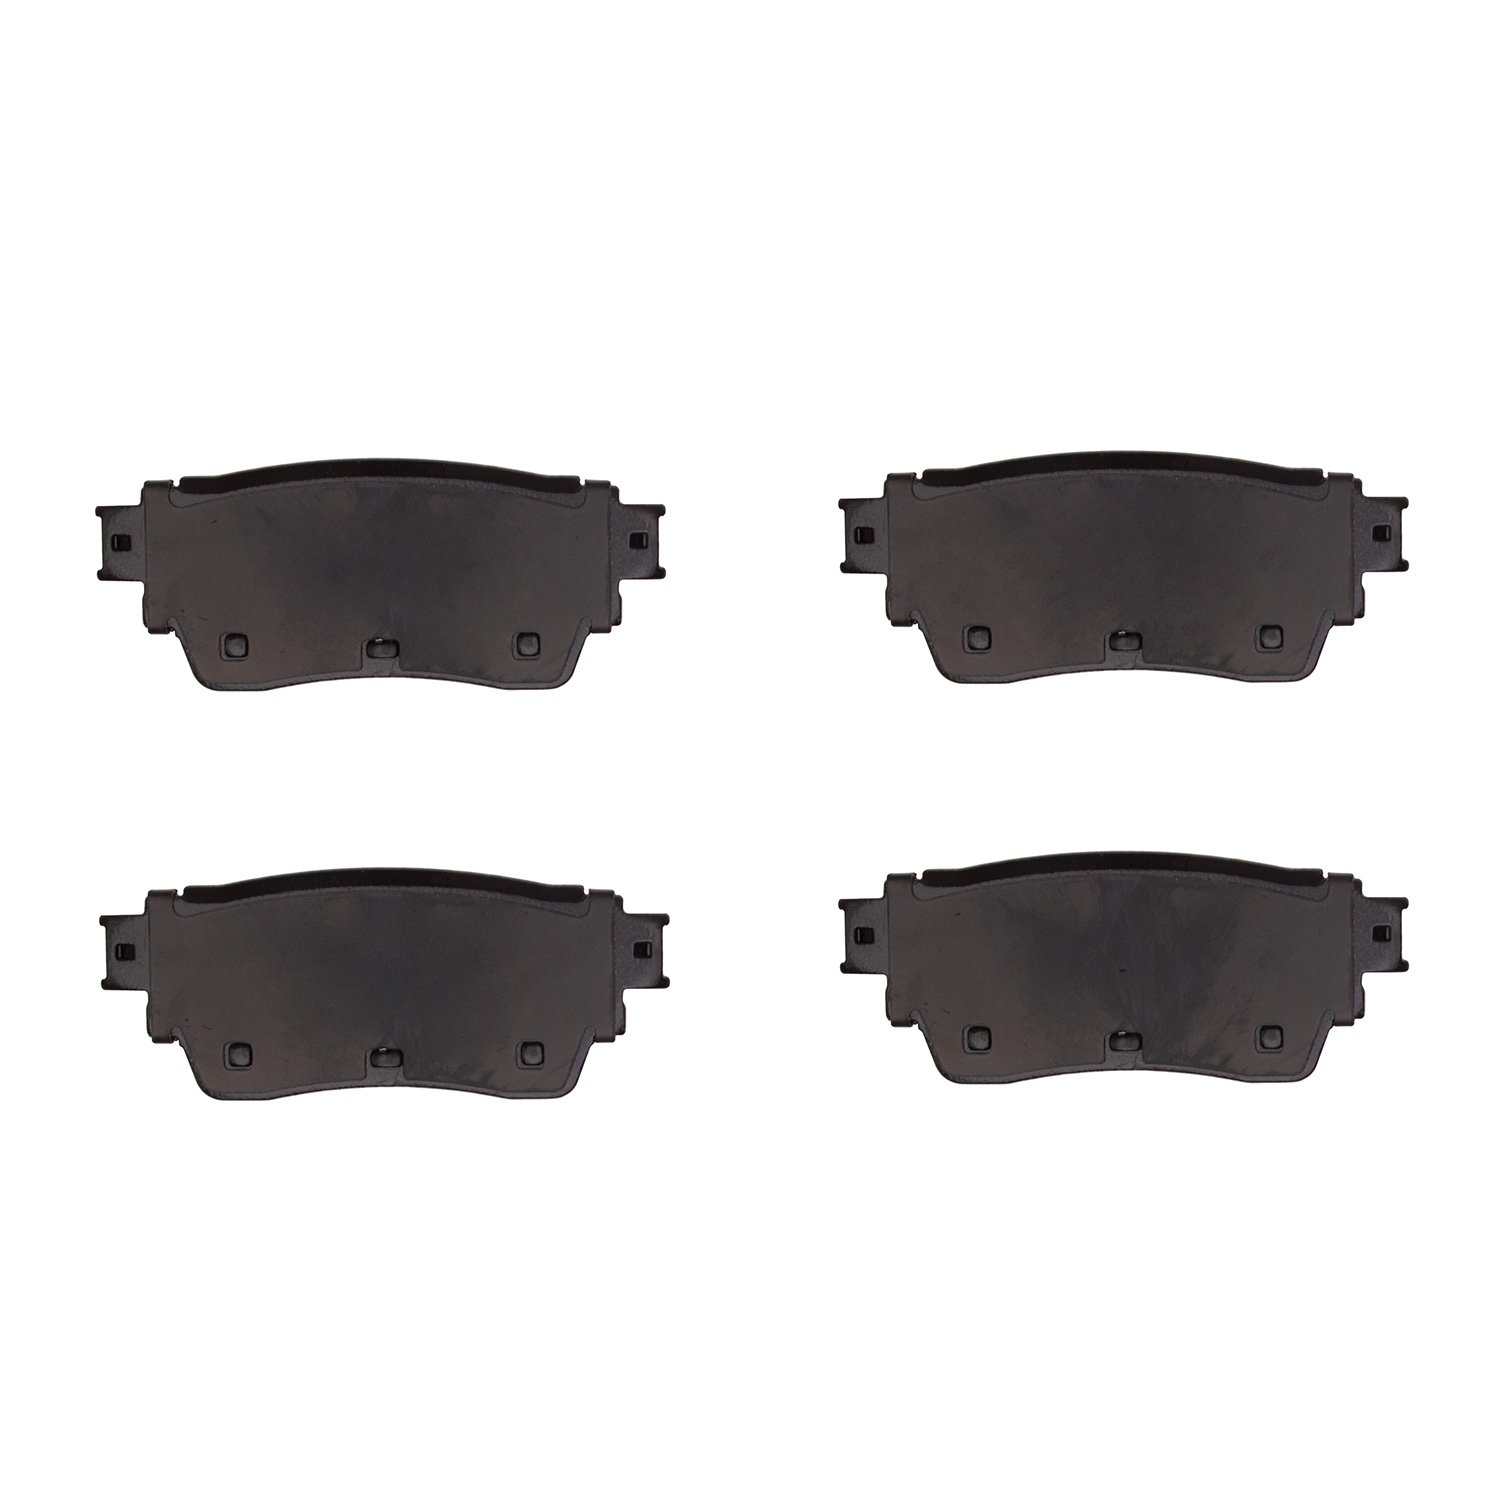 1551-2200-00 5000 Advanced Ceramic Brake Pads, Fits Select Multiple Makes/Models, Position: Rear